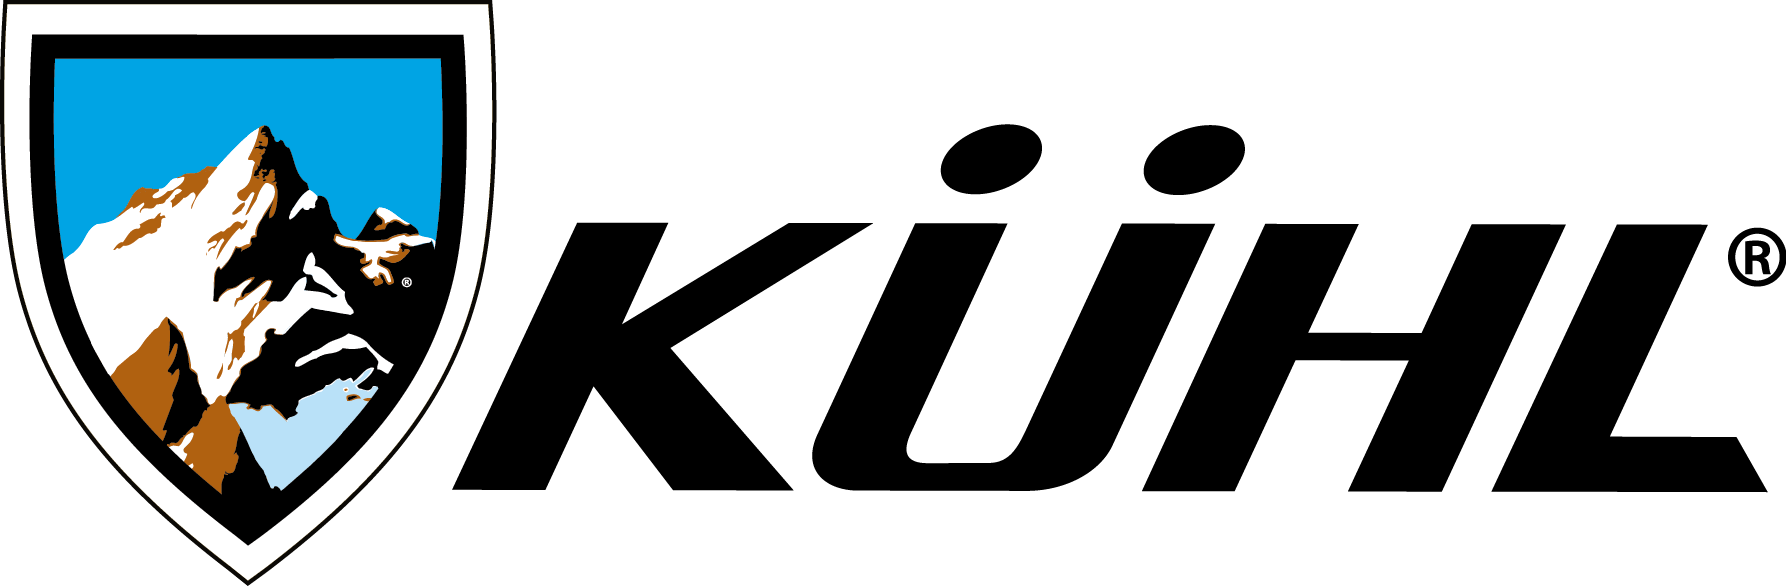 logo_horizontal_black-text.png